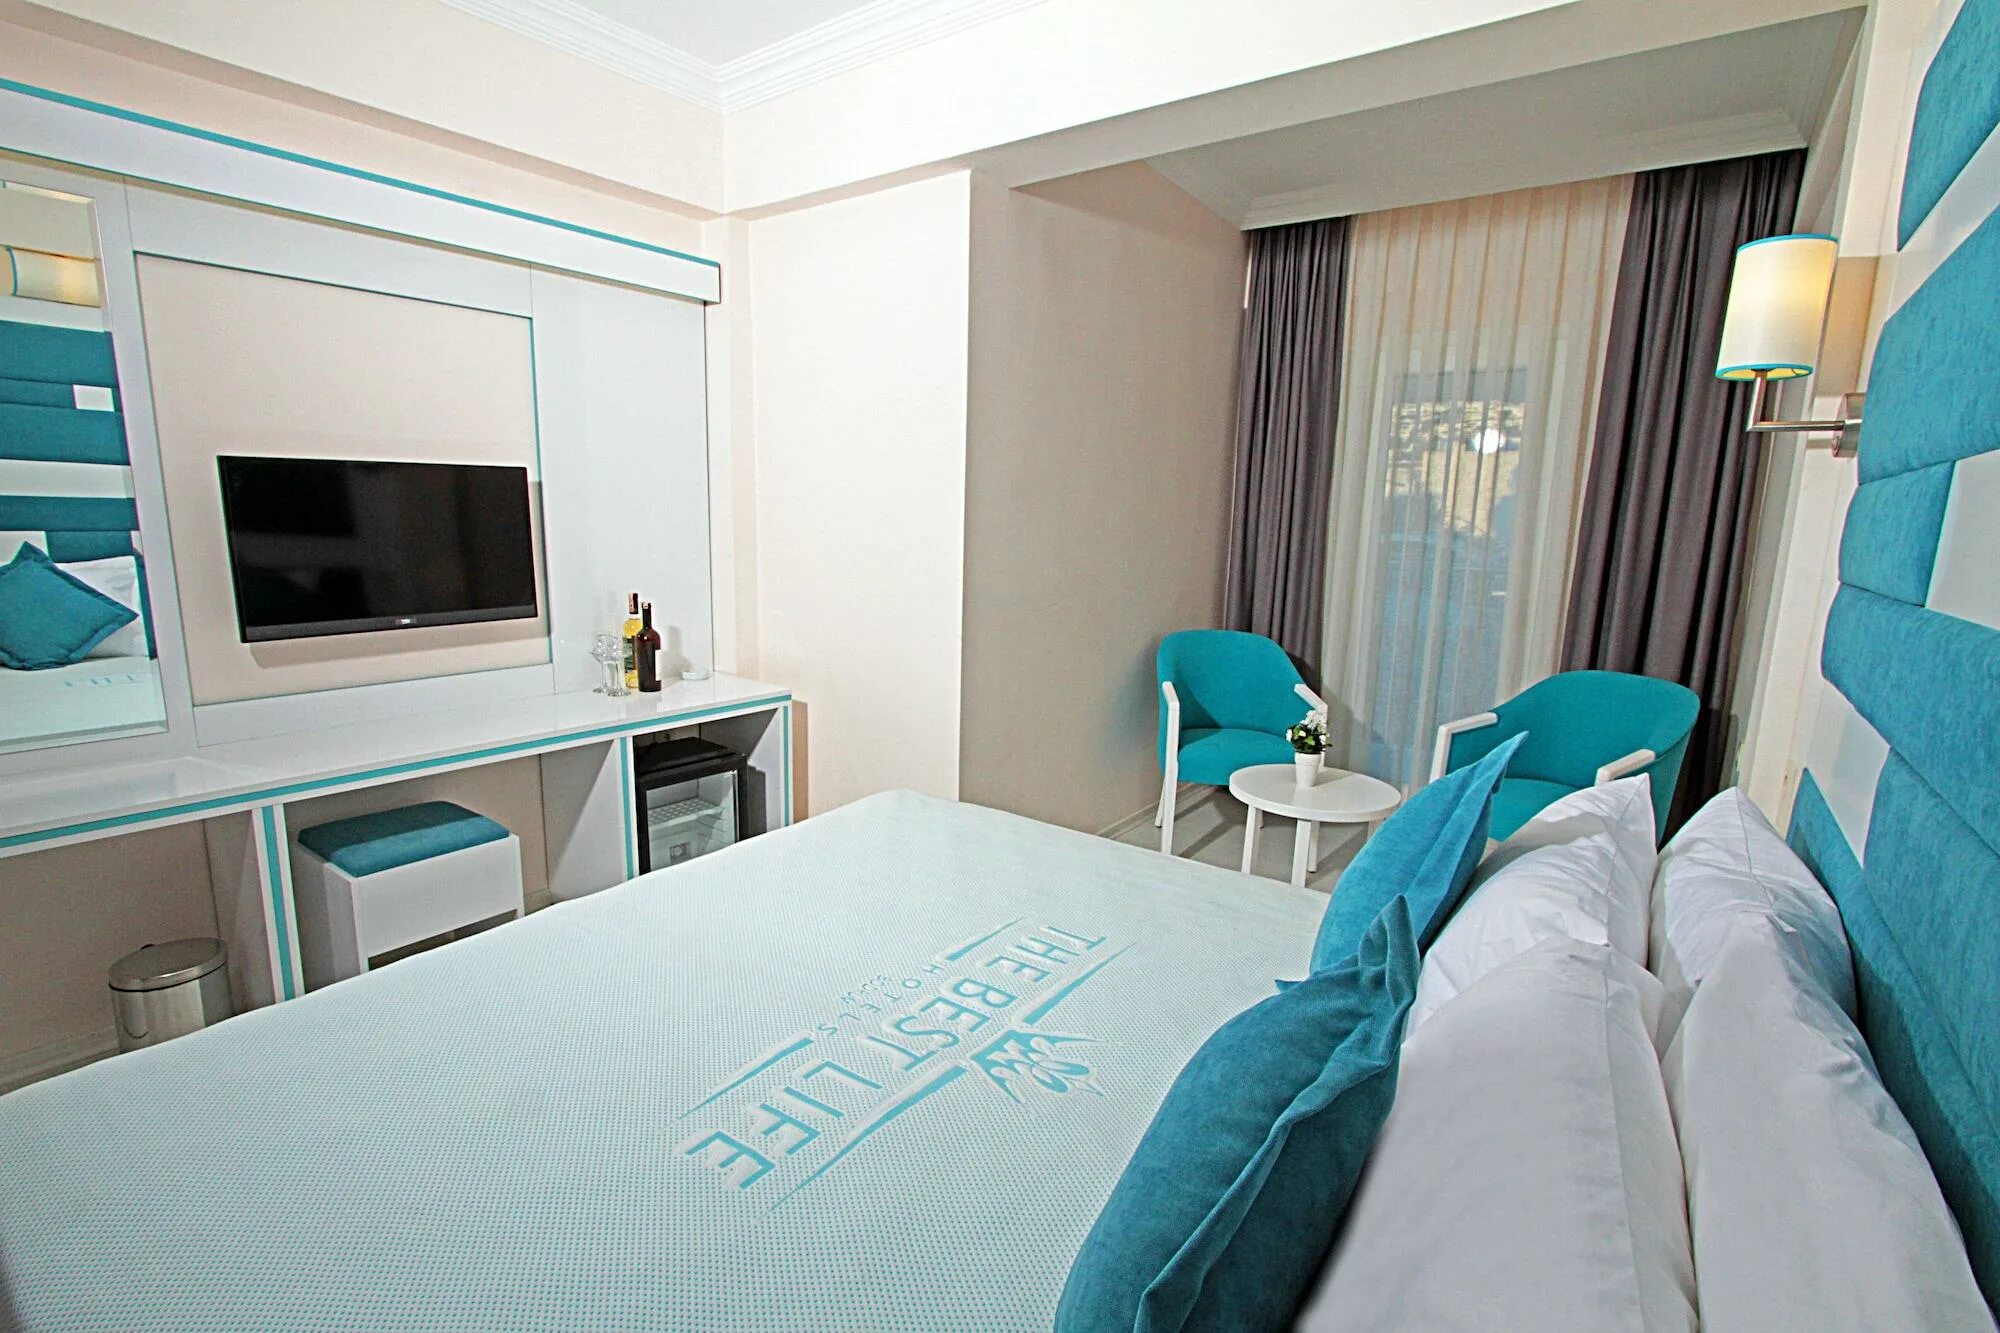 Be life hotel. The best Life Hotel Bodrum. The best Life Hotel 4. Энджел лайф отель в Турции.